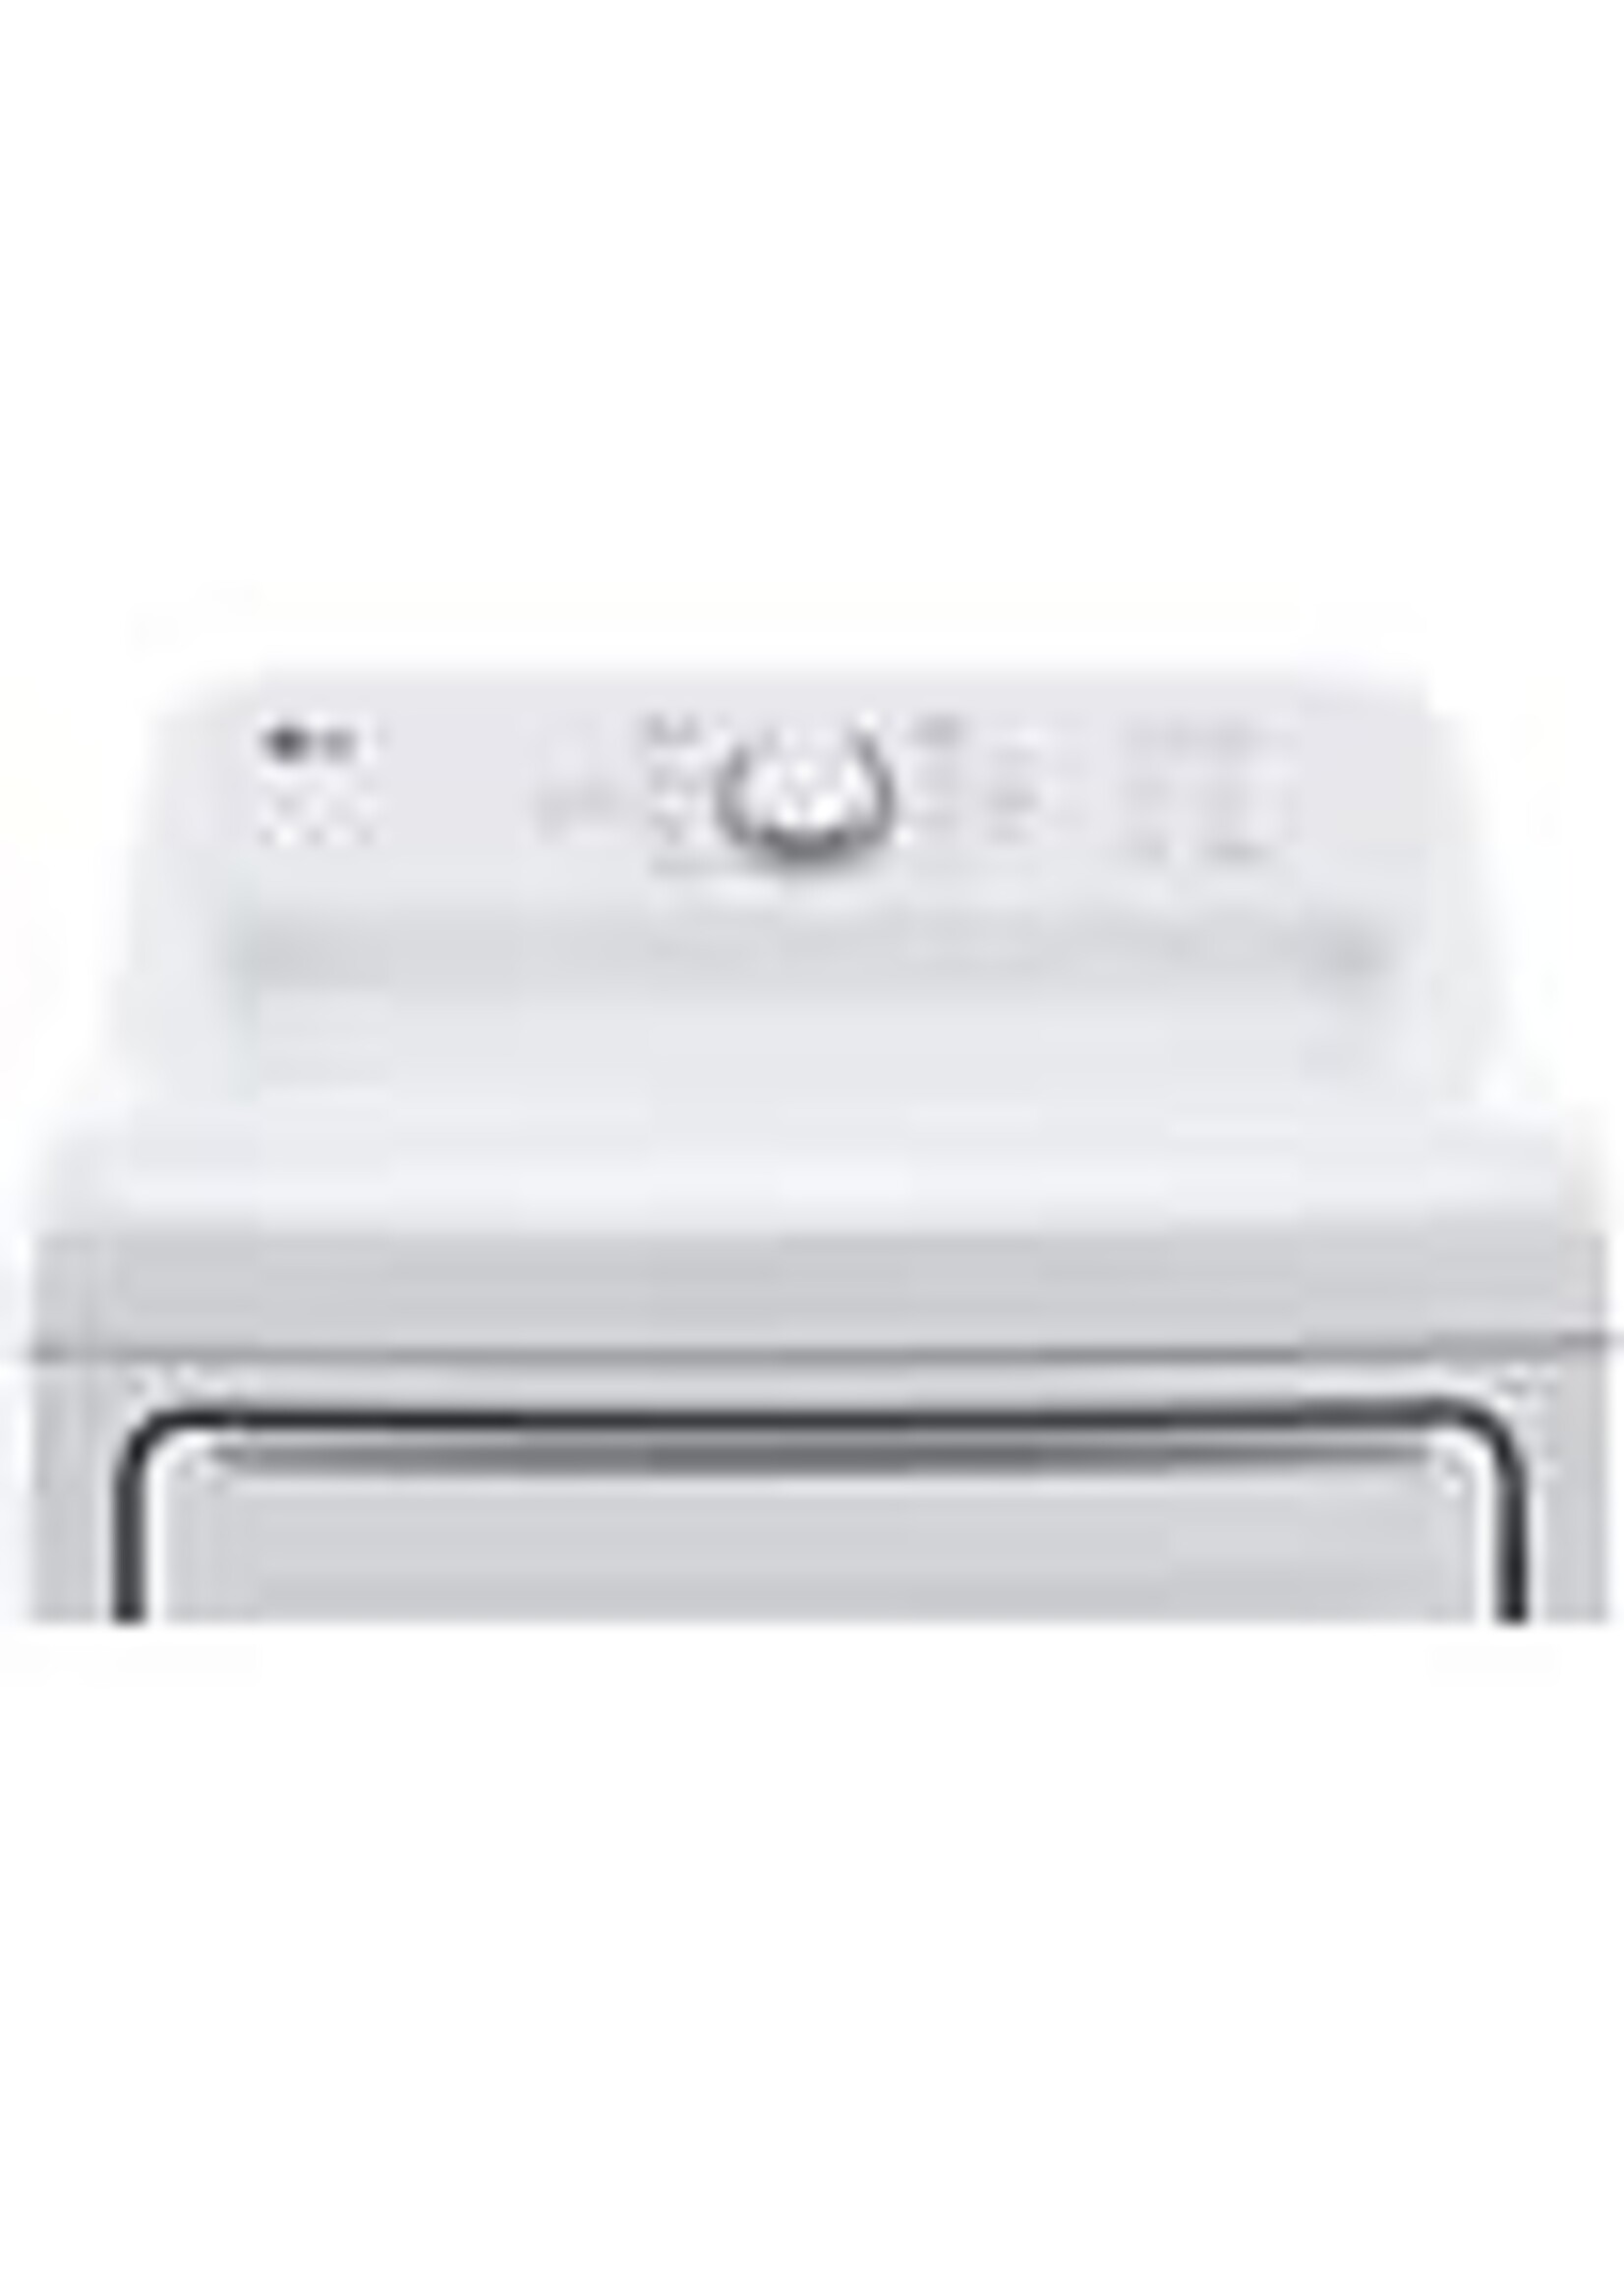 LG 7.3 CF Ultra Large High Efficiency Gas Dryer - White